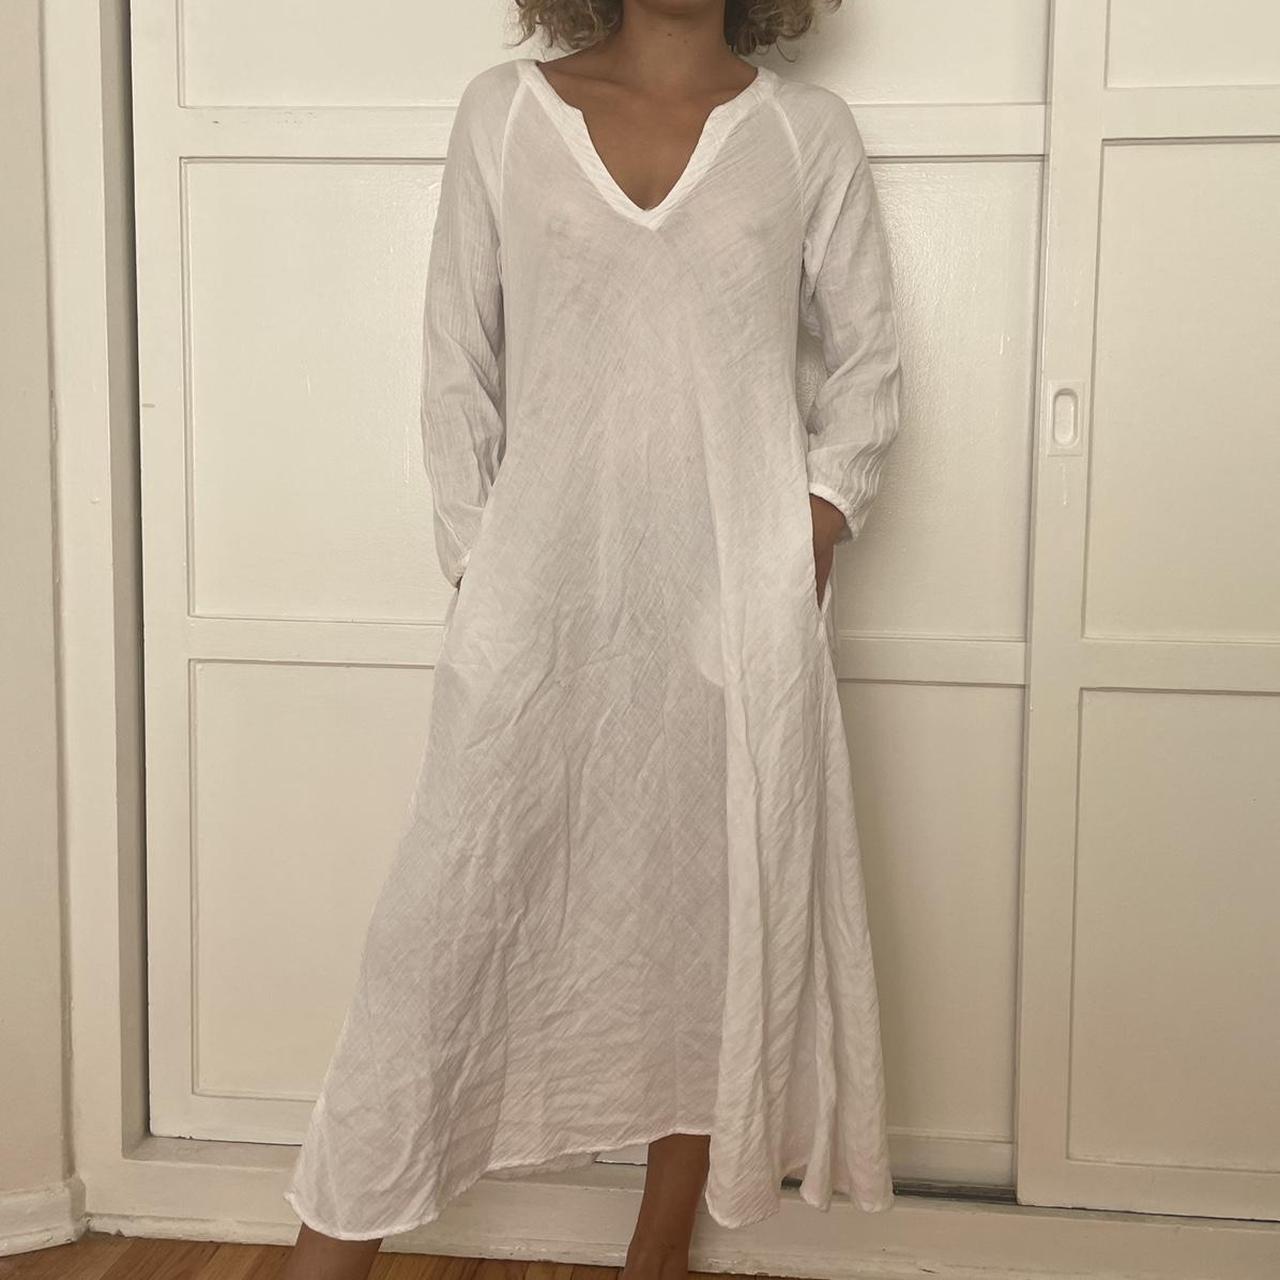 XIRENA Women's White Dress (3)